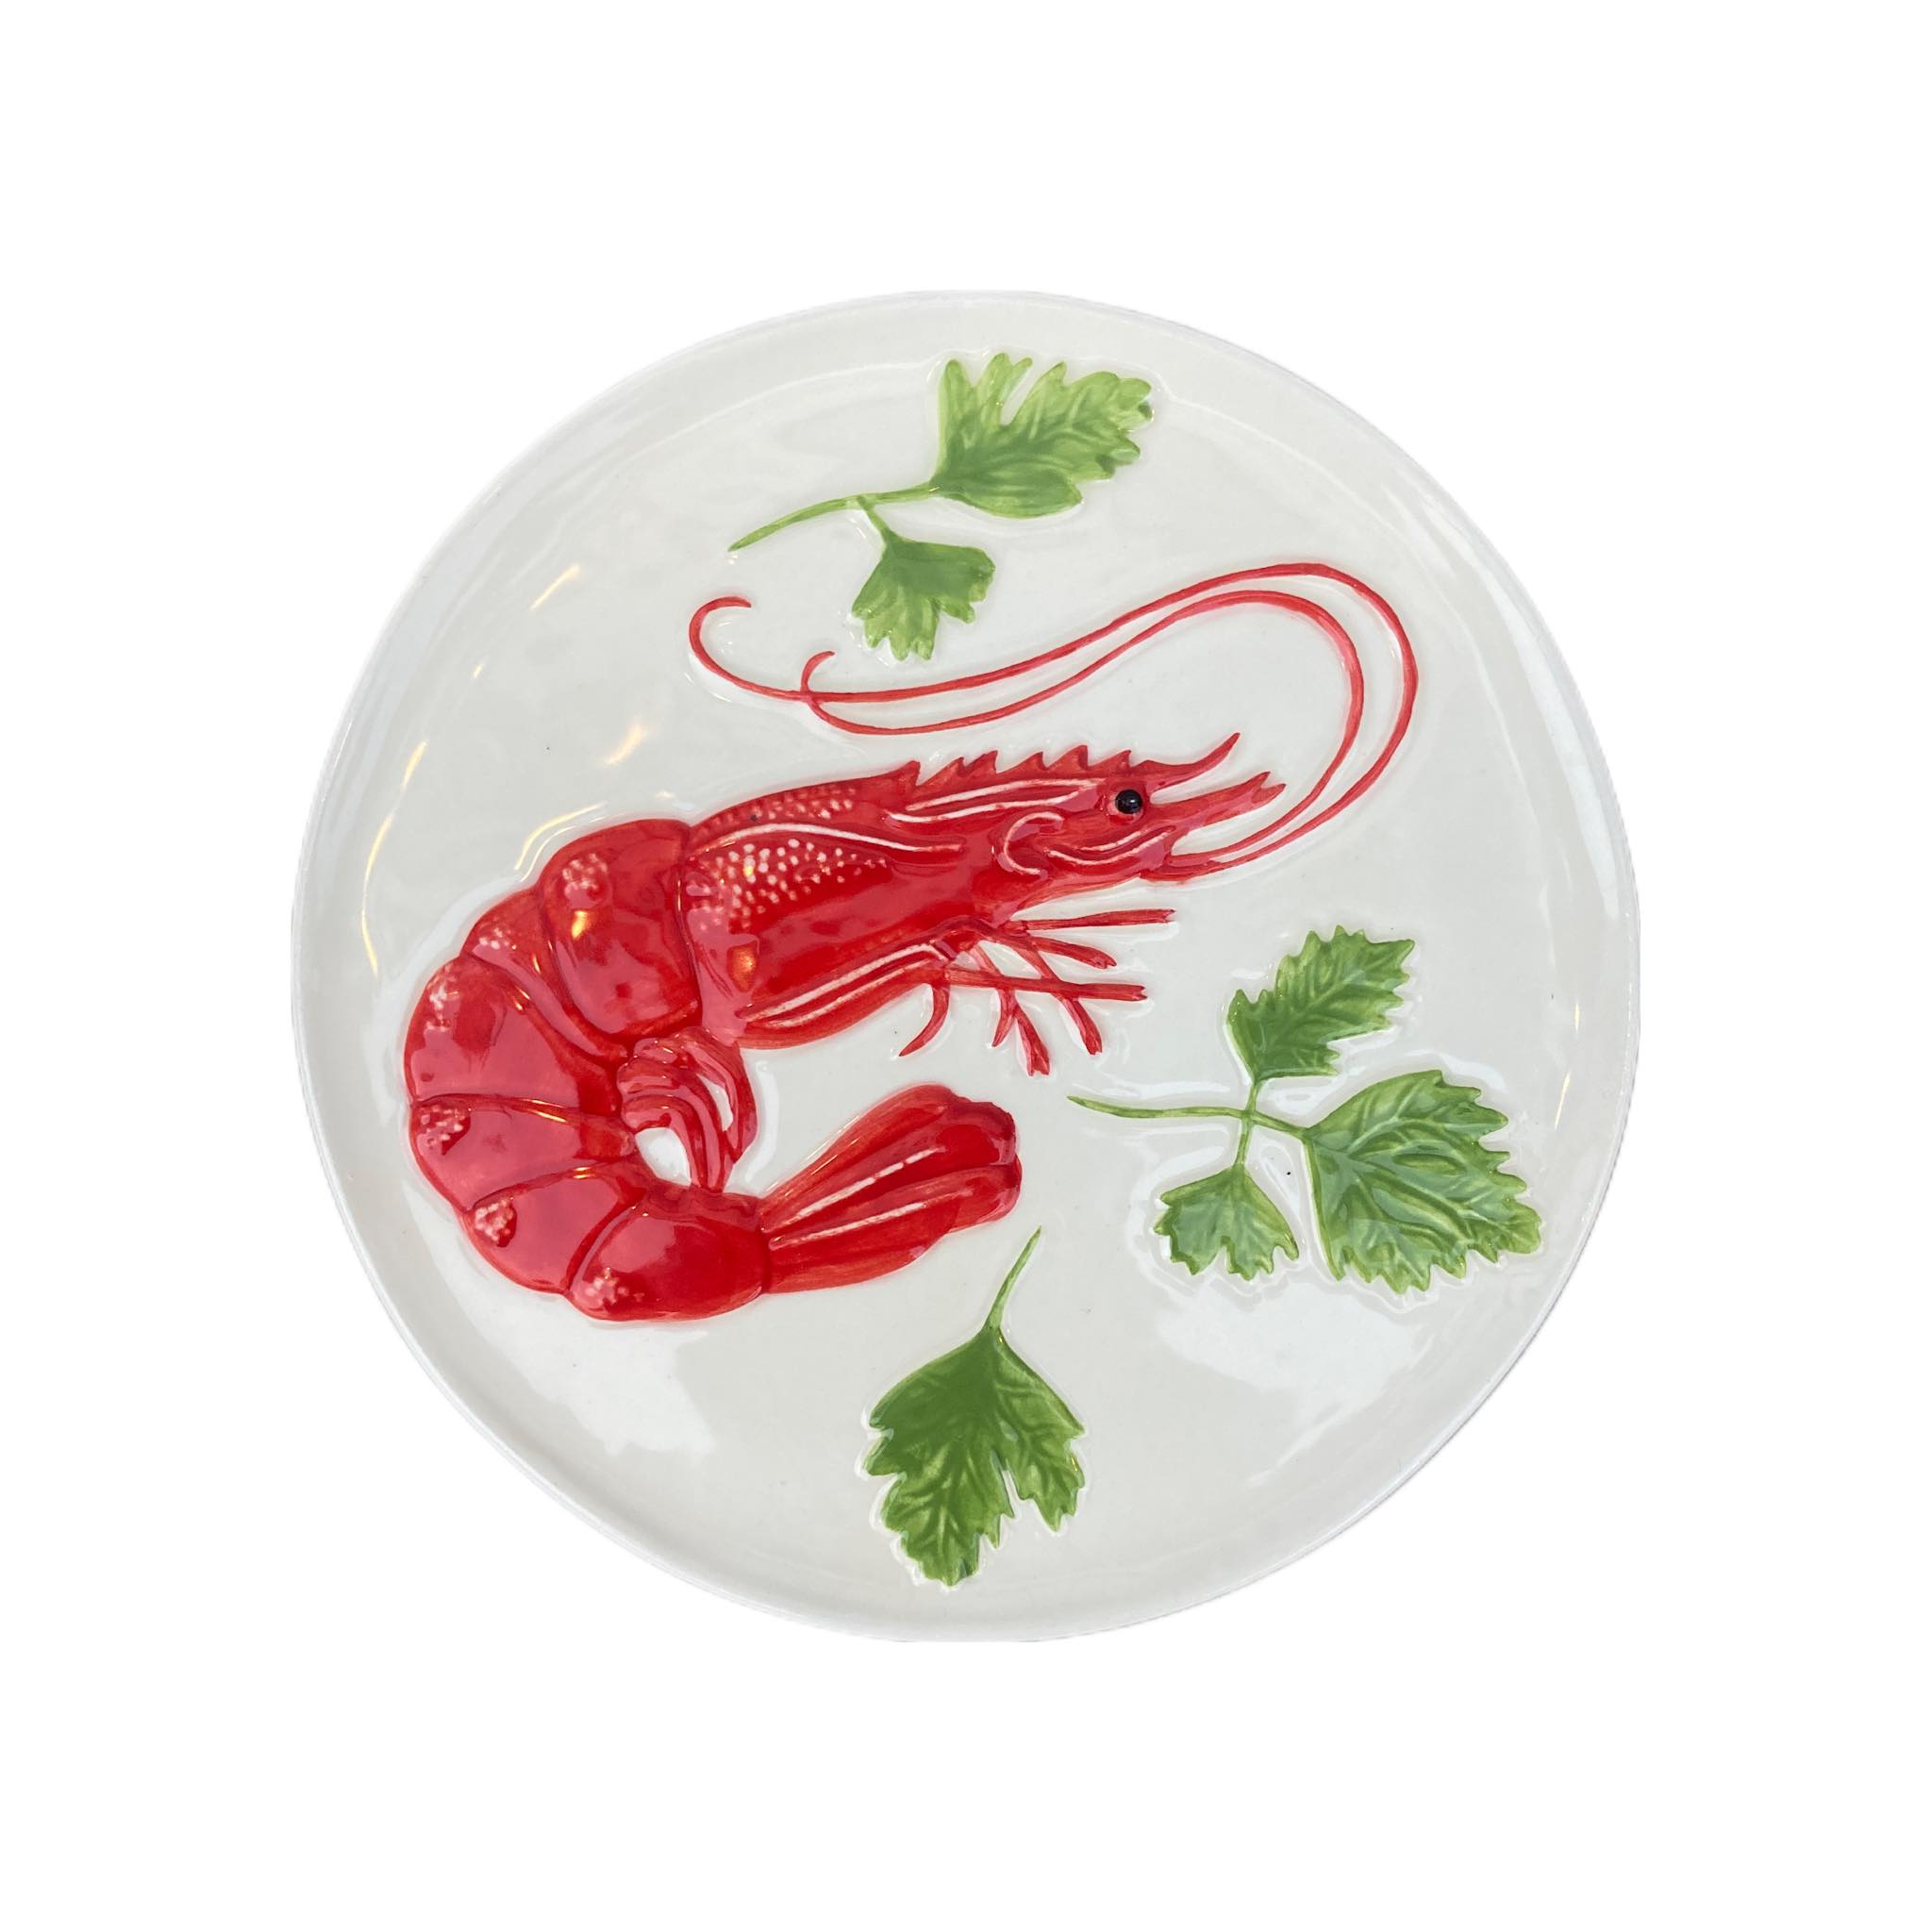 andklevering-plate-de-la-mer-shrimp